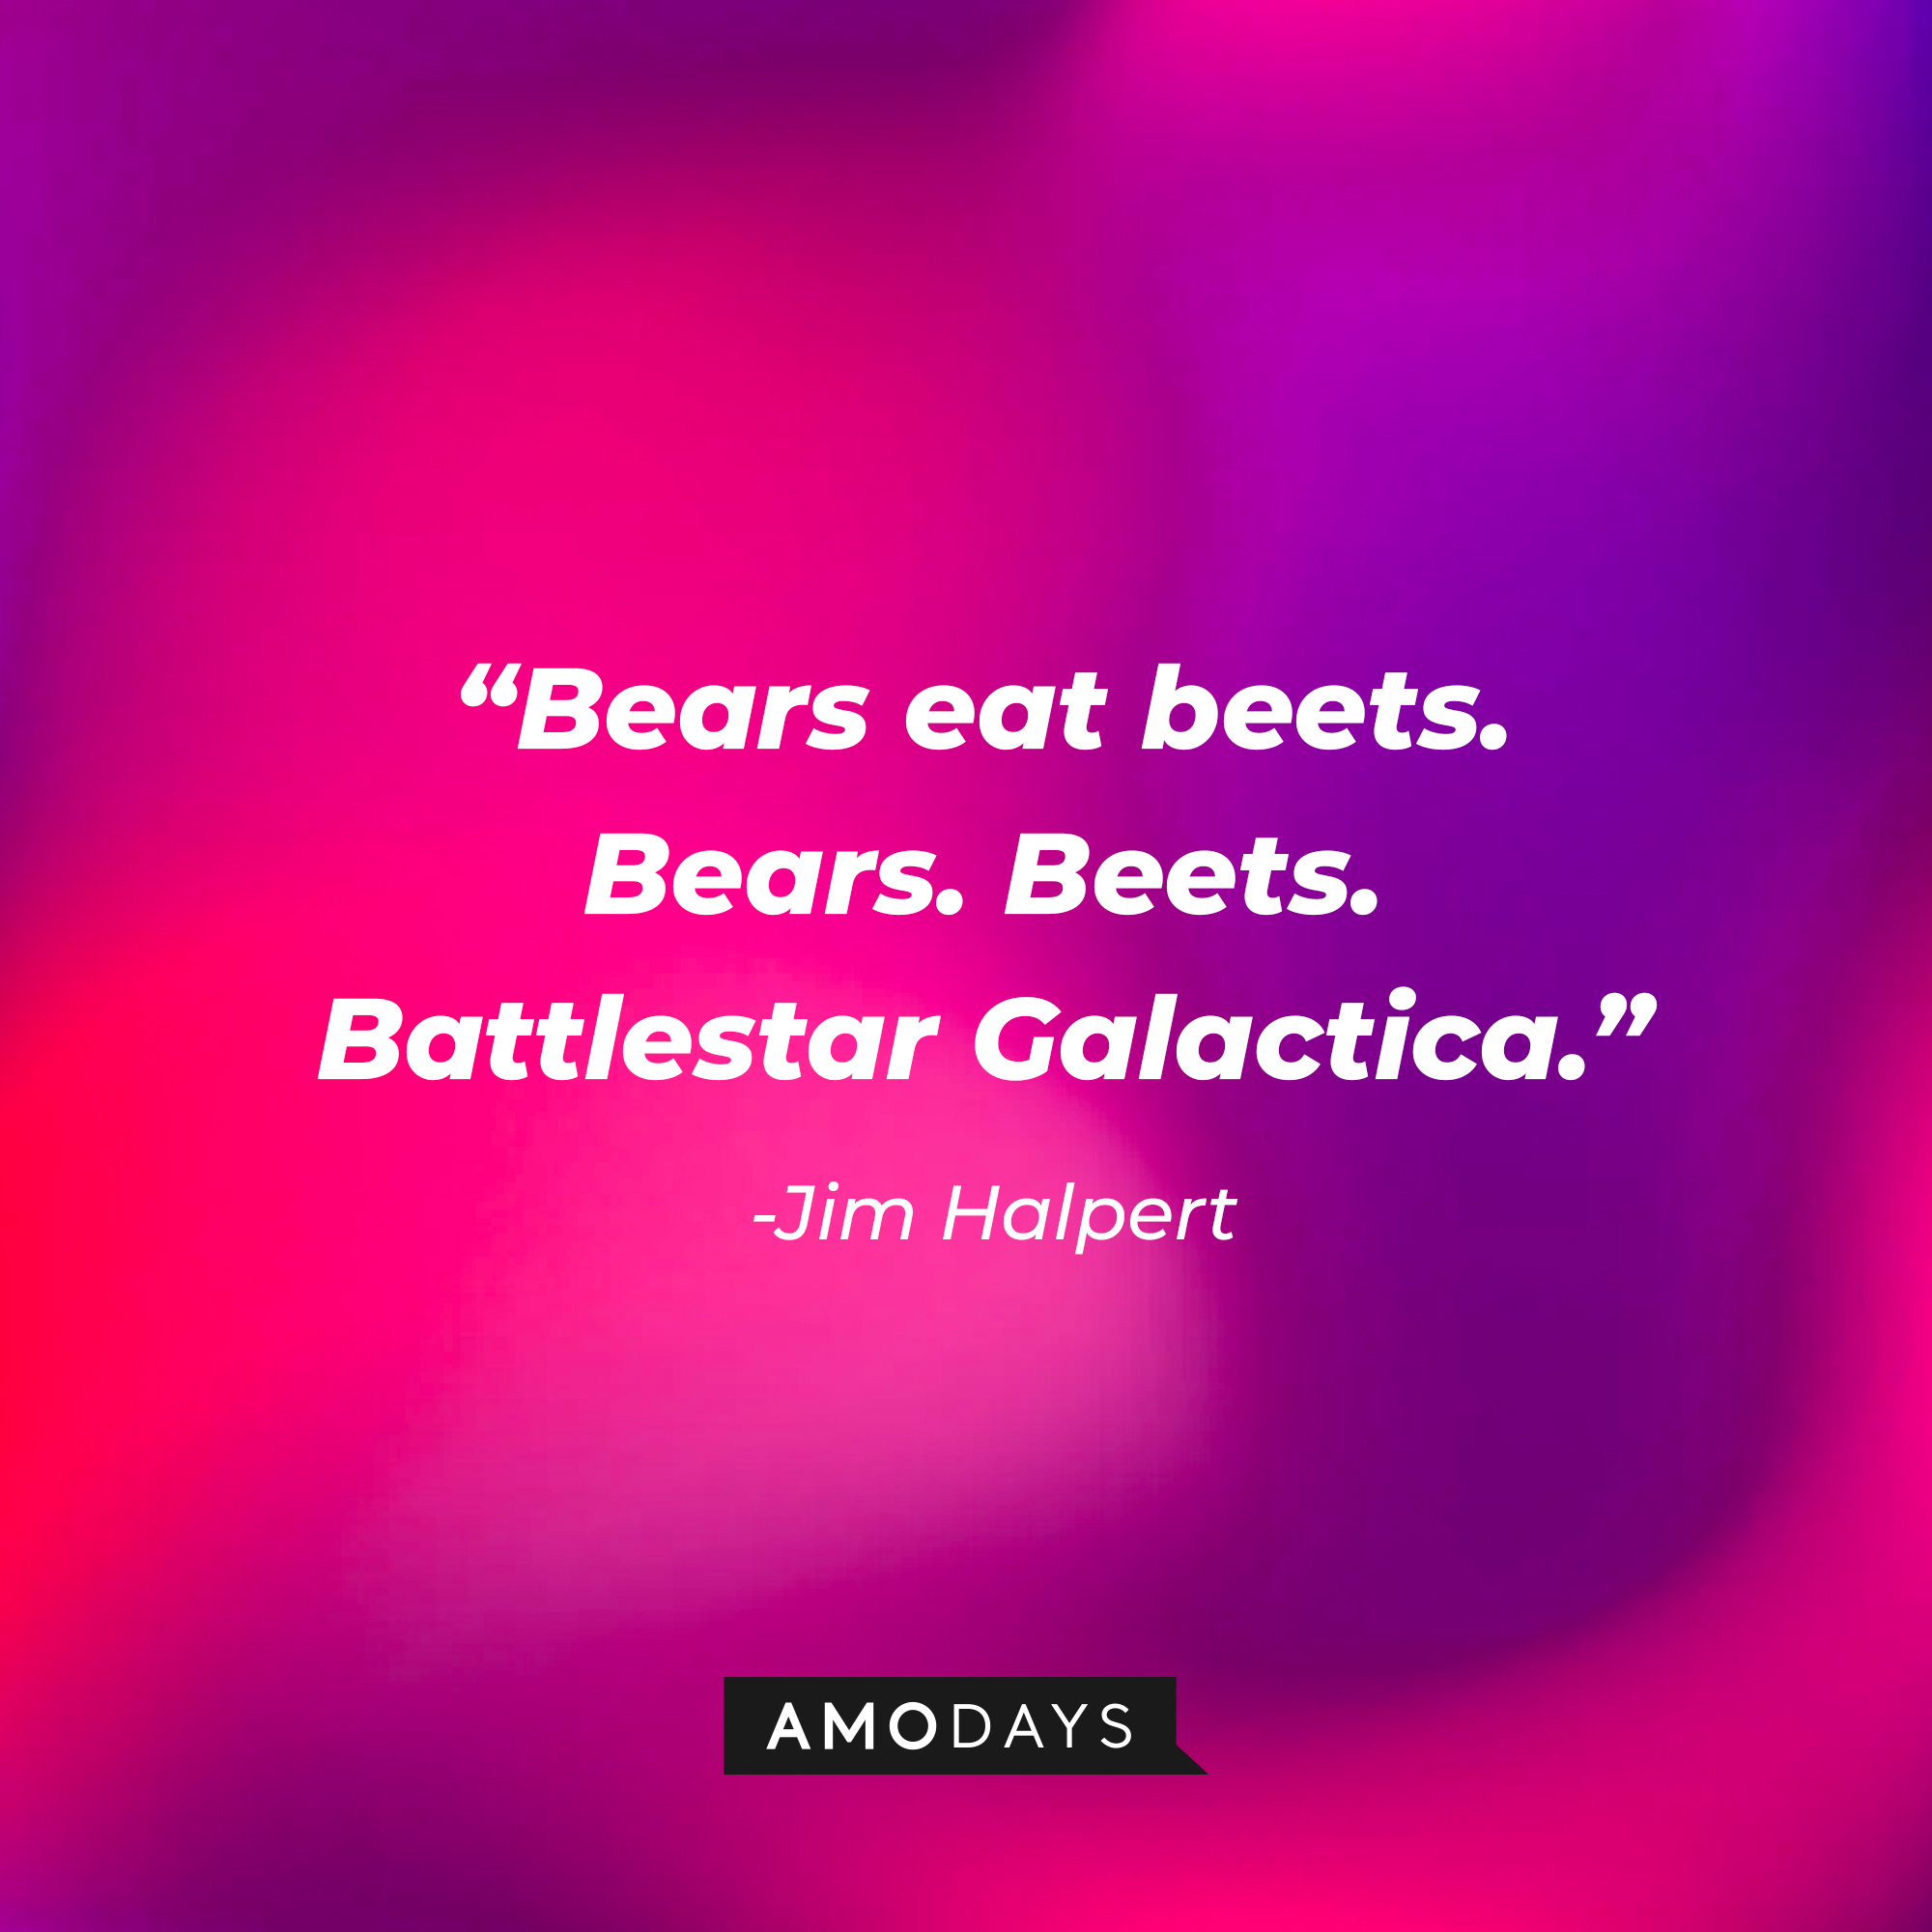 Jim Halpert’s quote: “Bears eat beets. Bears. Beets. Battlestar Galactica.” | Source: AmoDays